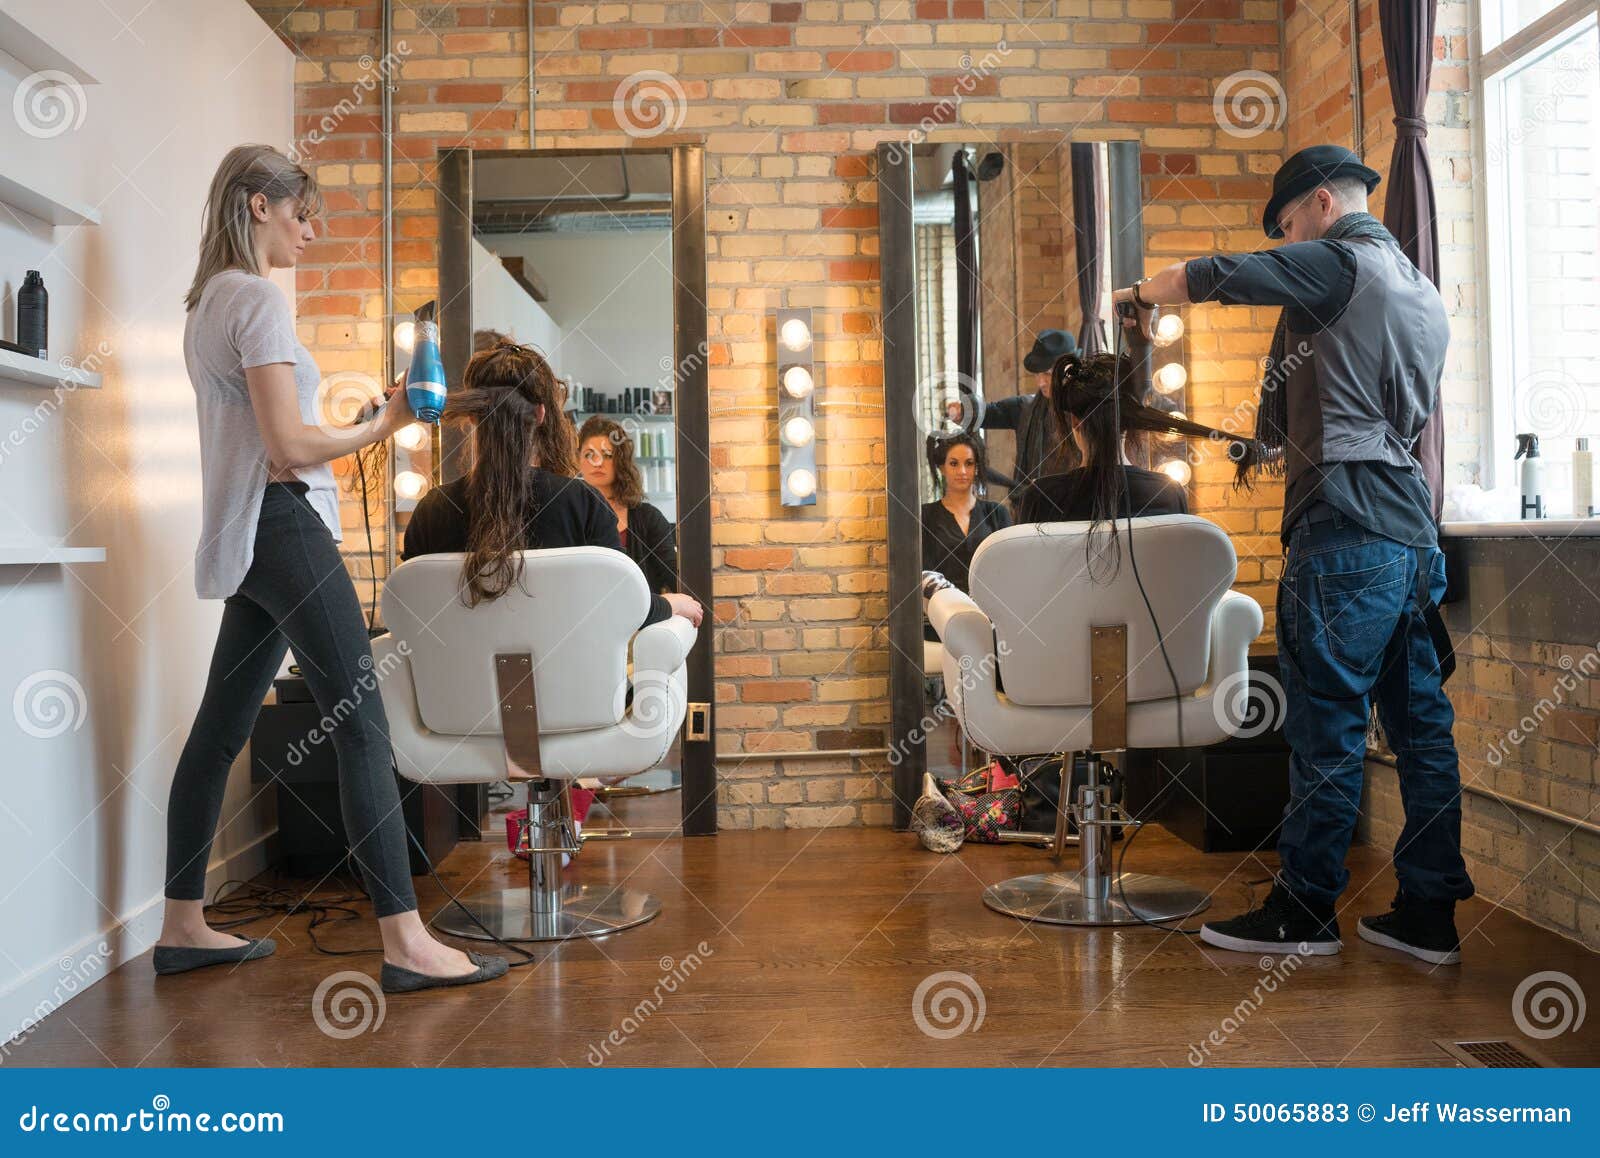 Weman Getting Hair Styled stock image. Image of salon - 50065883